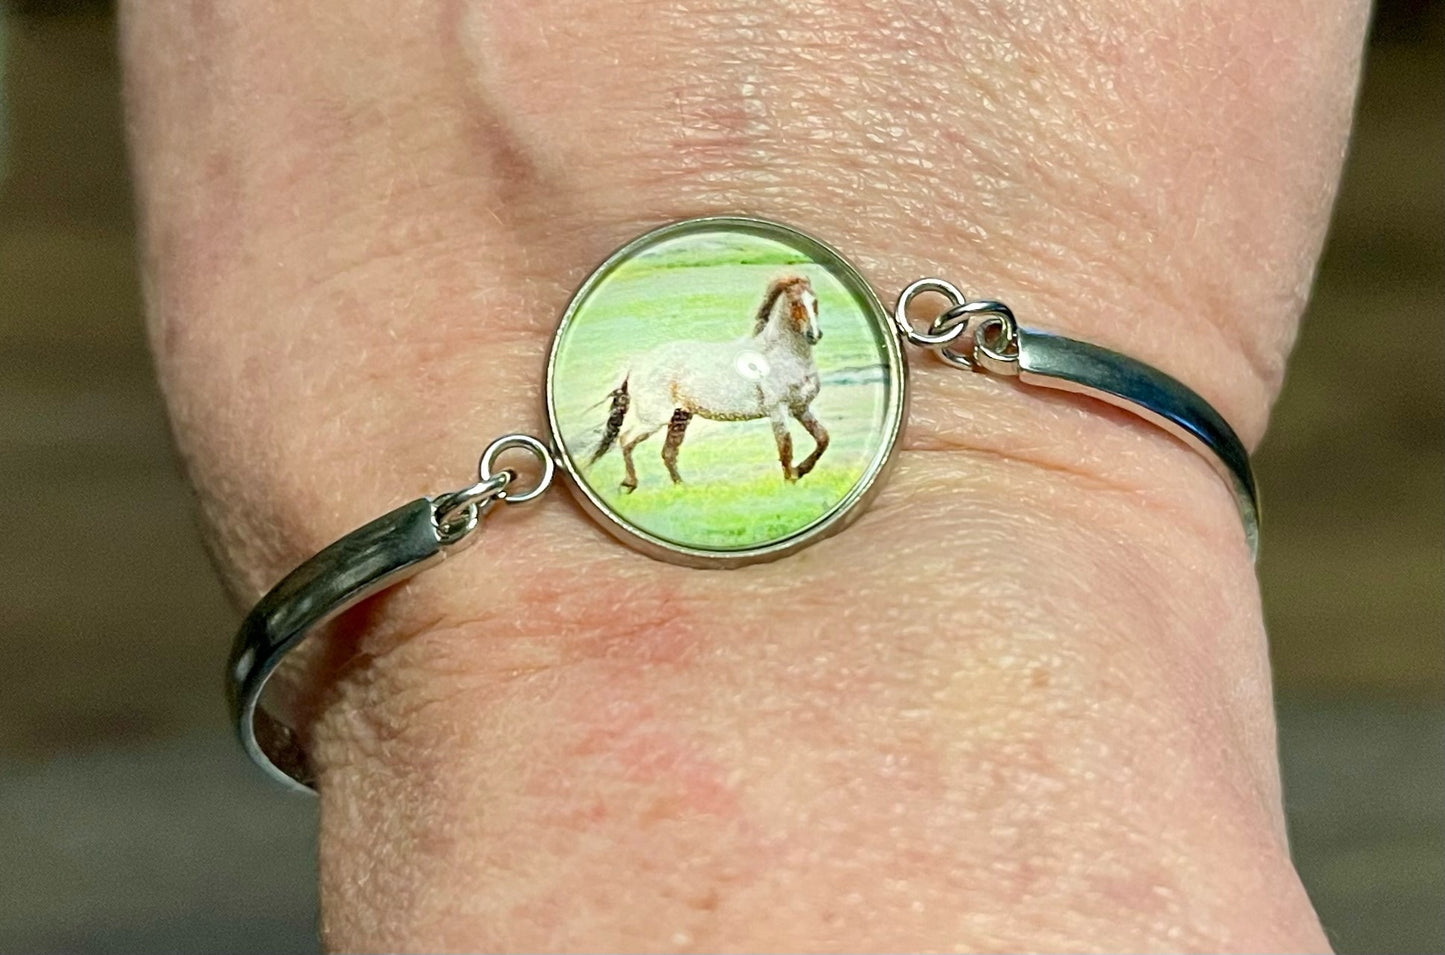 Chasing Horses adjustable metal bracelet